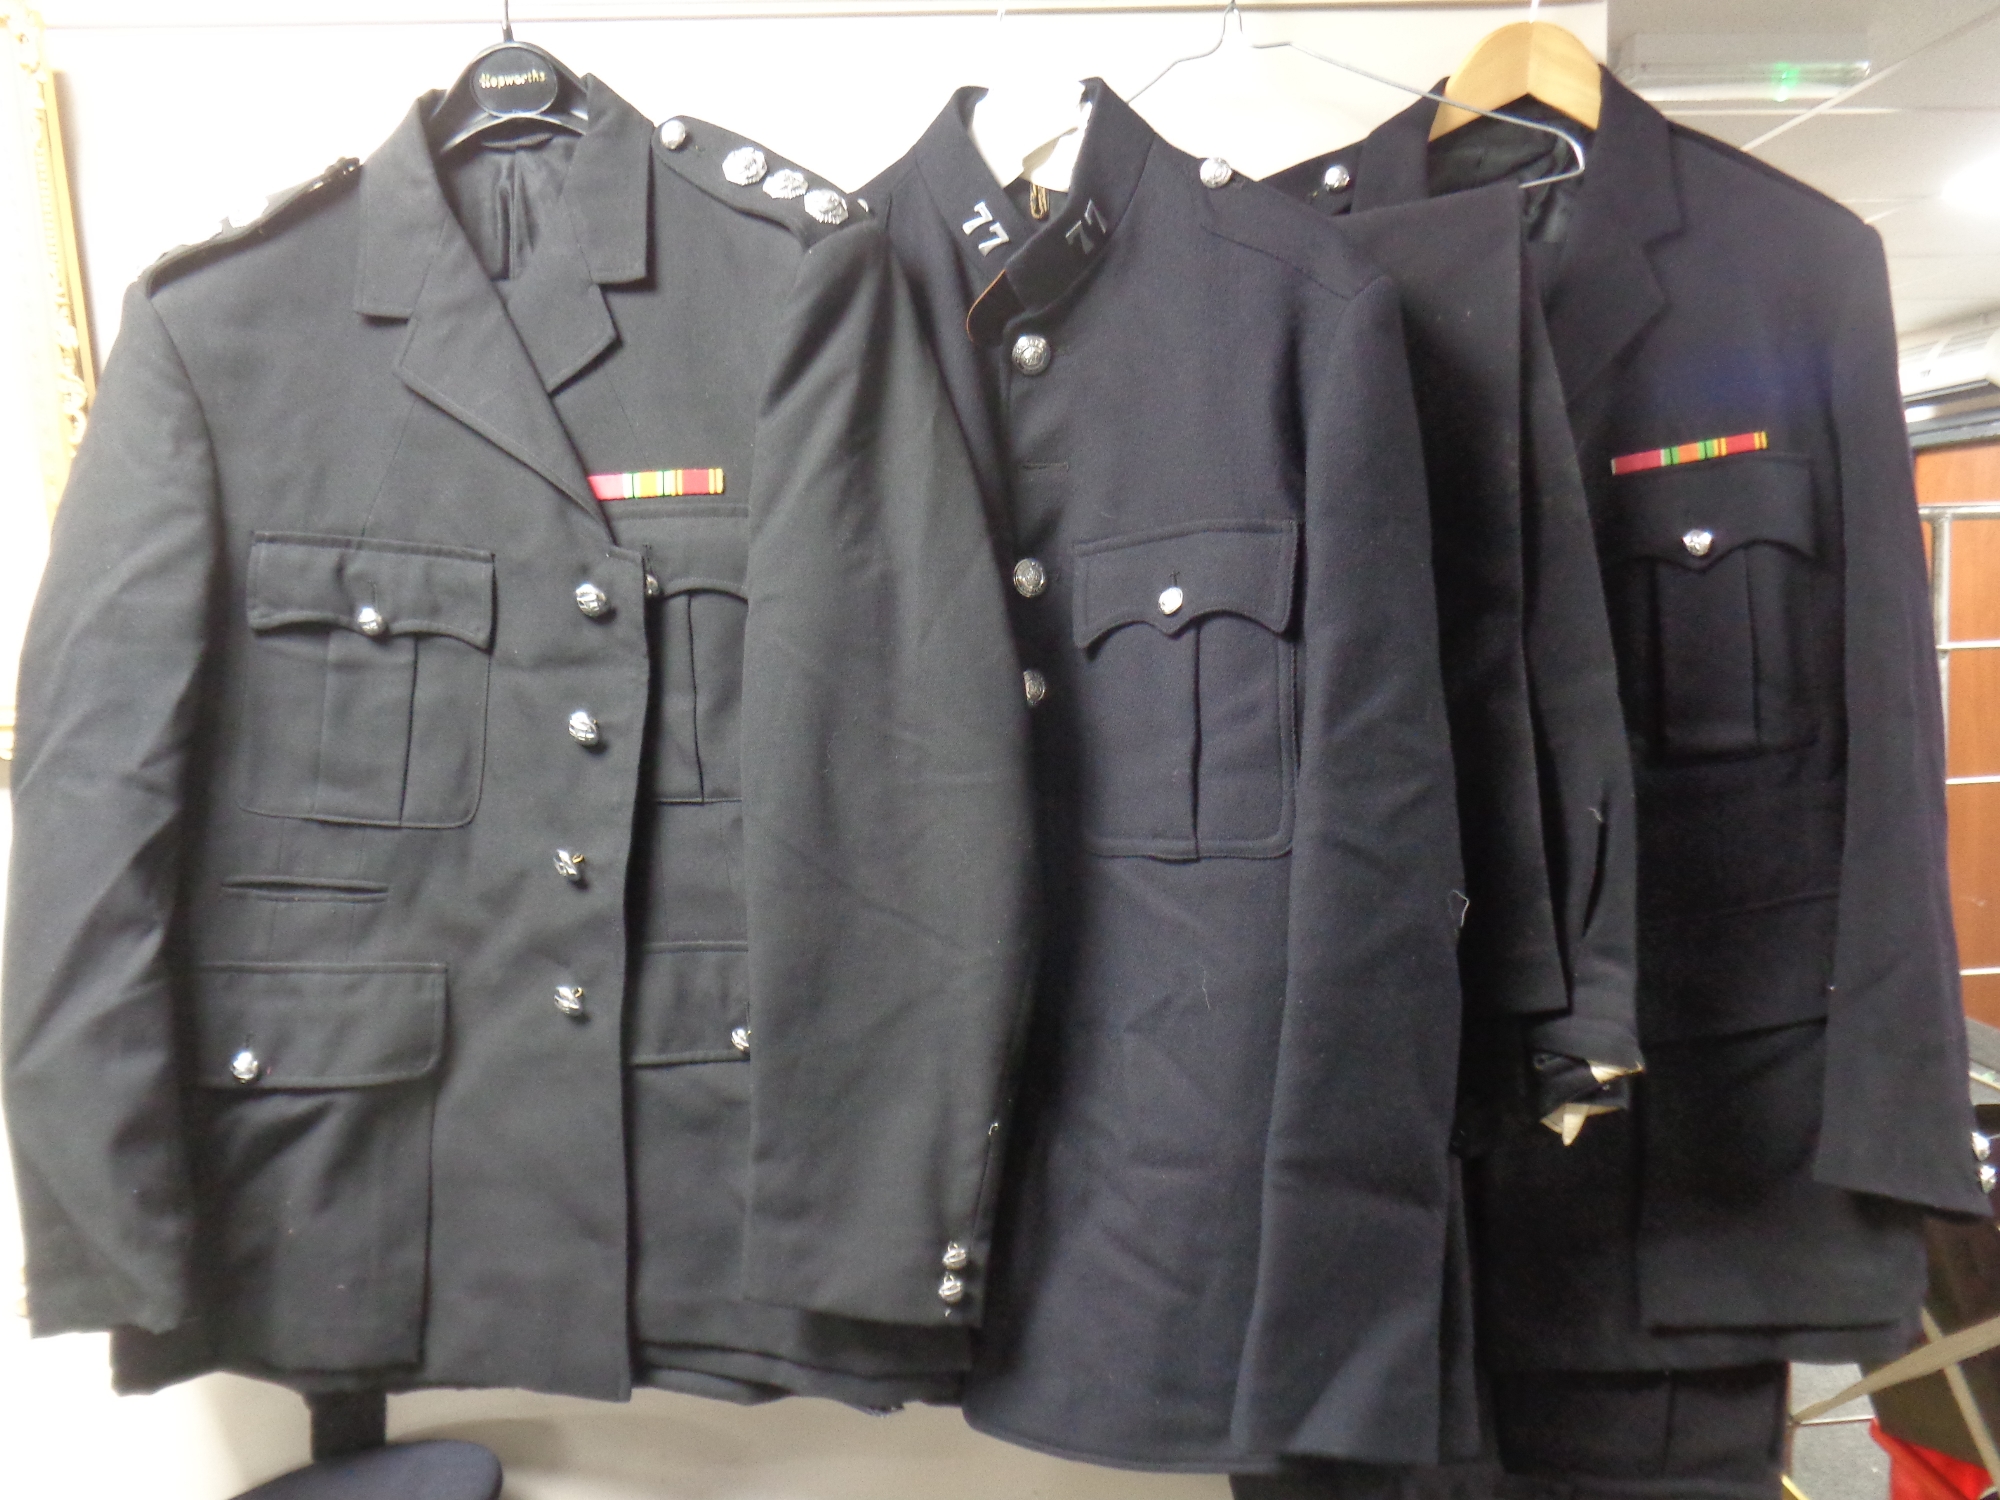 A quantity of fireman's uniforms,